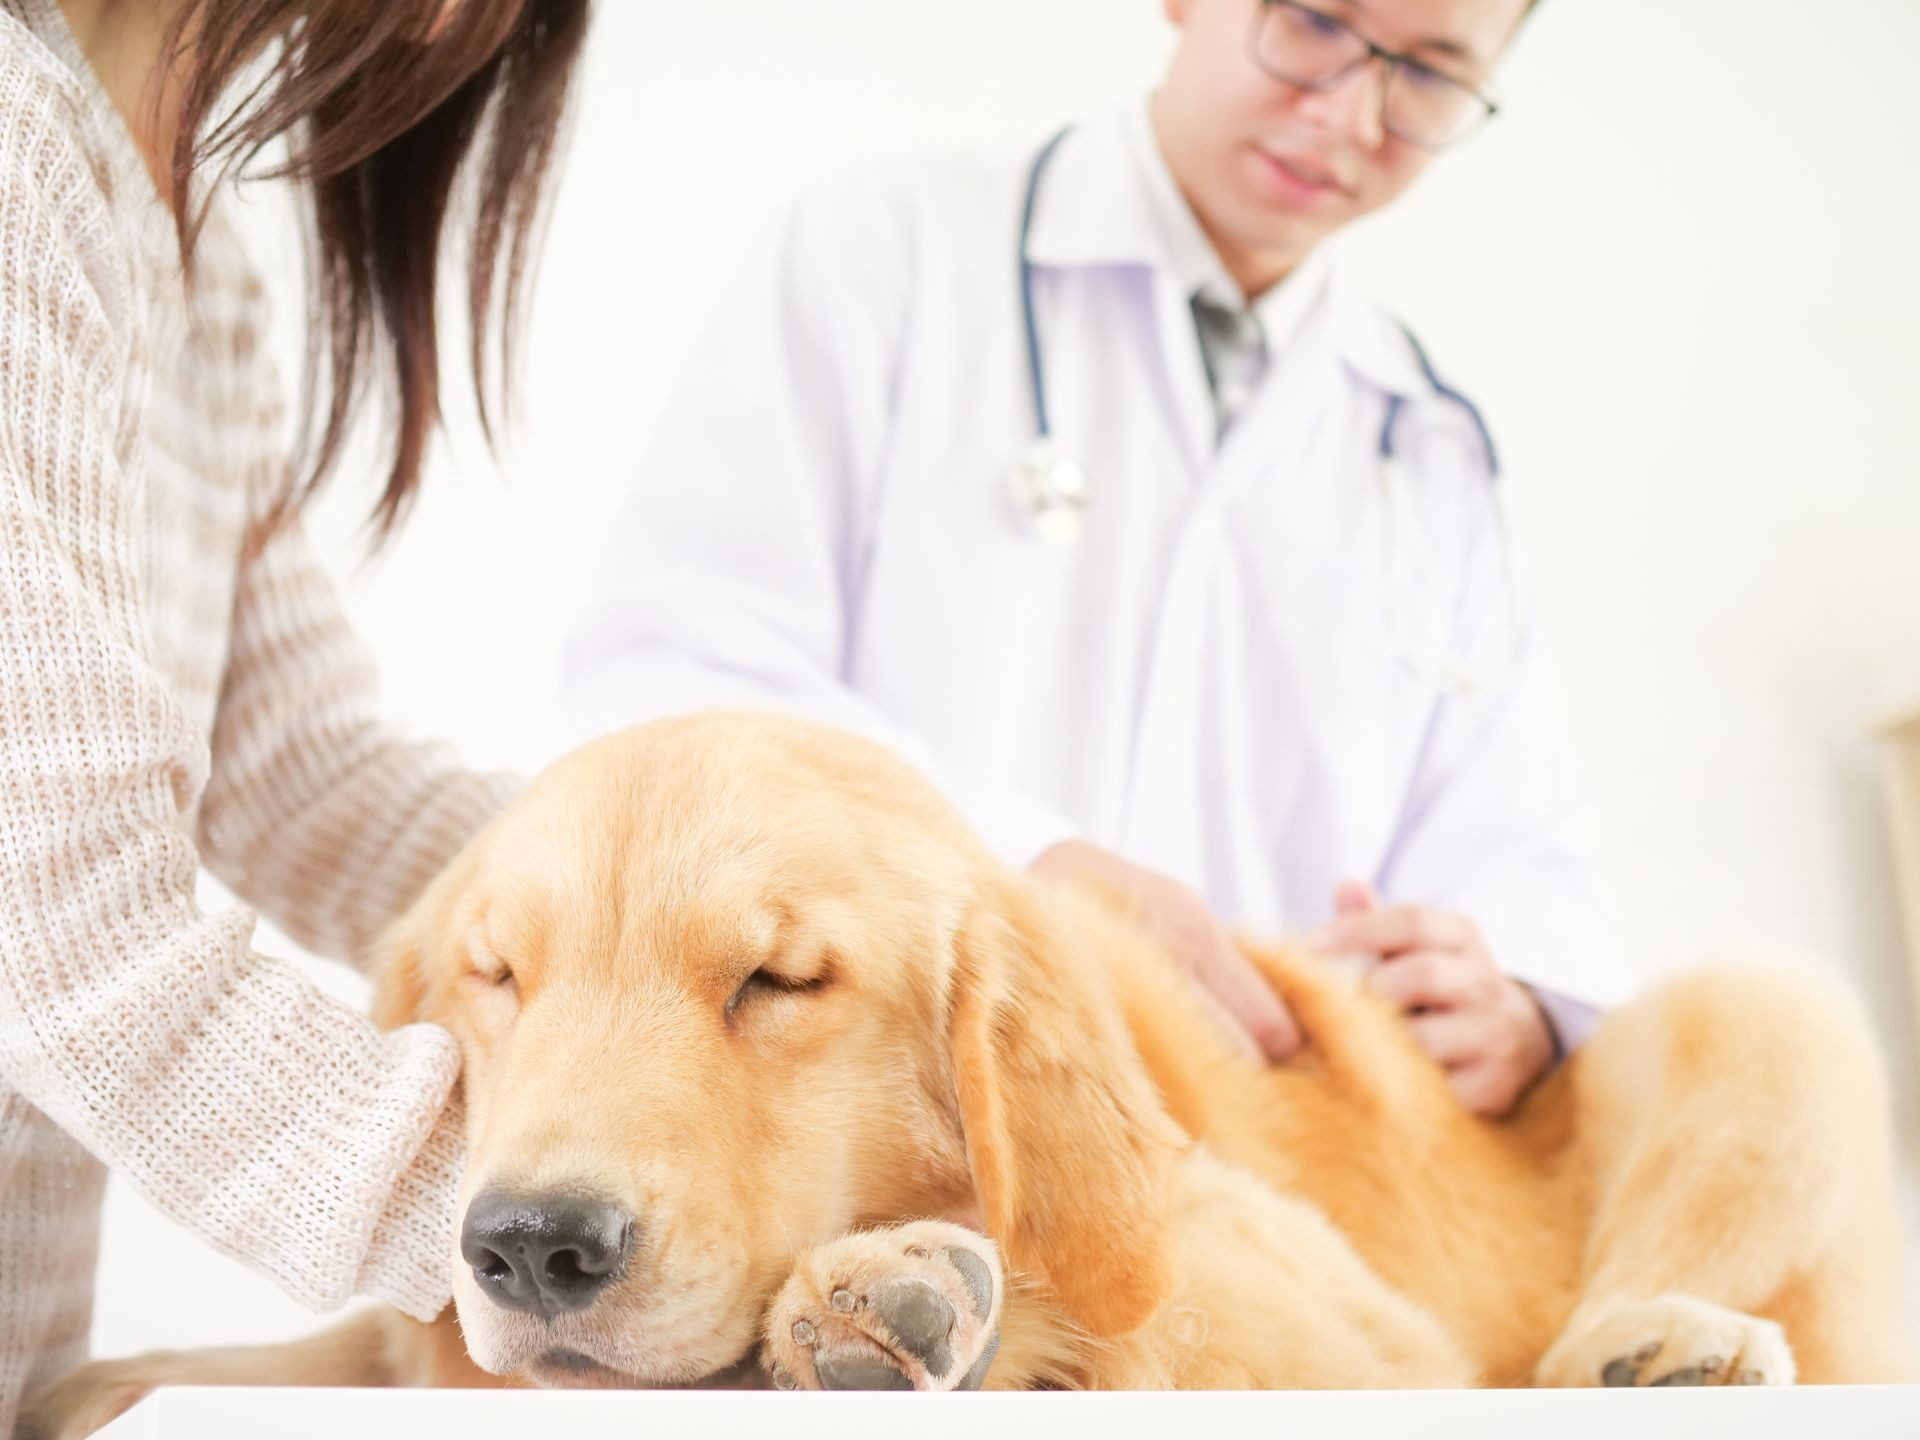 Veterinarian checking the dog golden retriever in pet clinic hospital